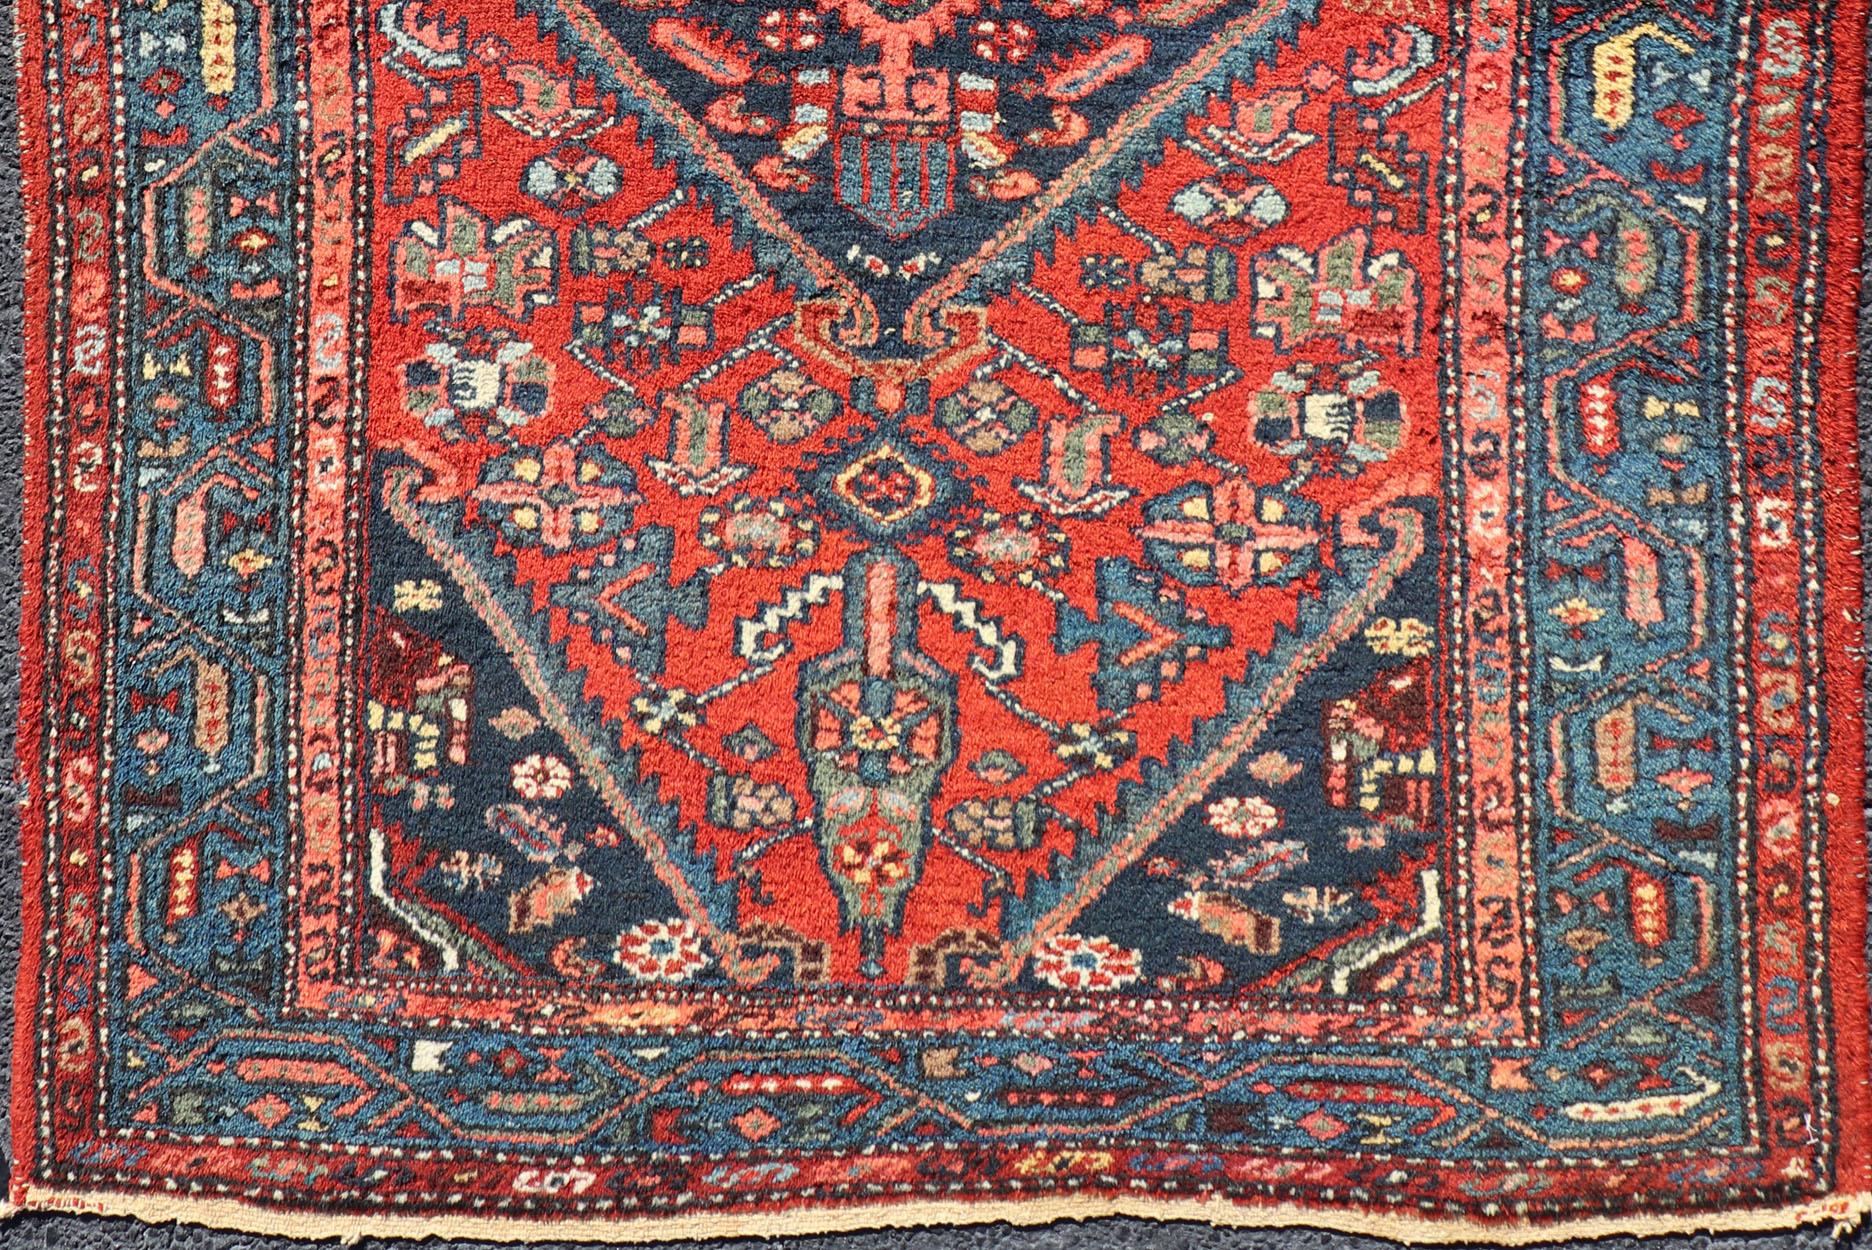 colorful vintage rug